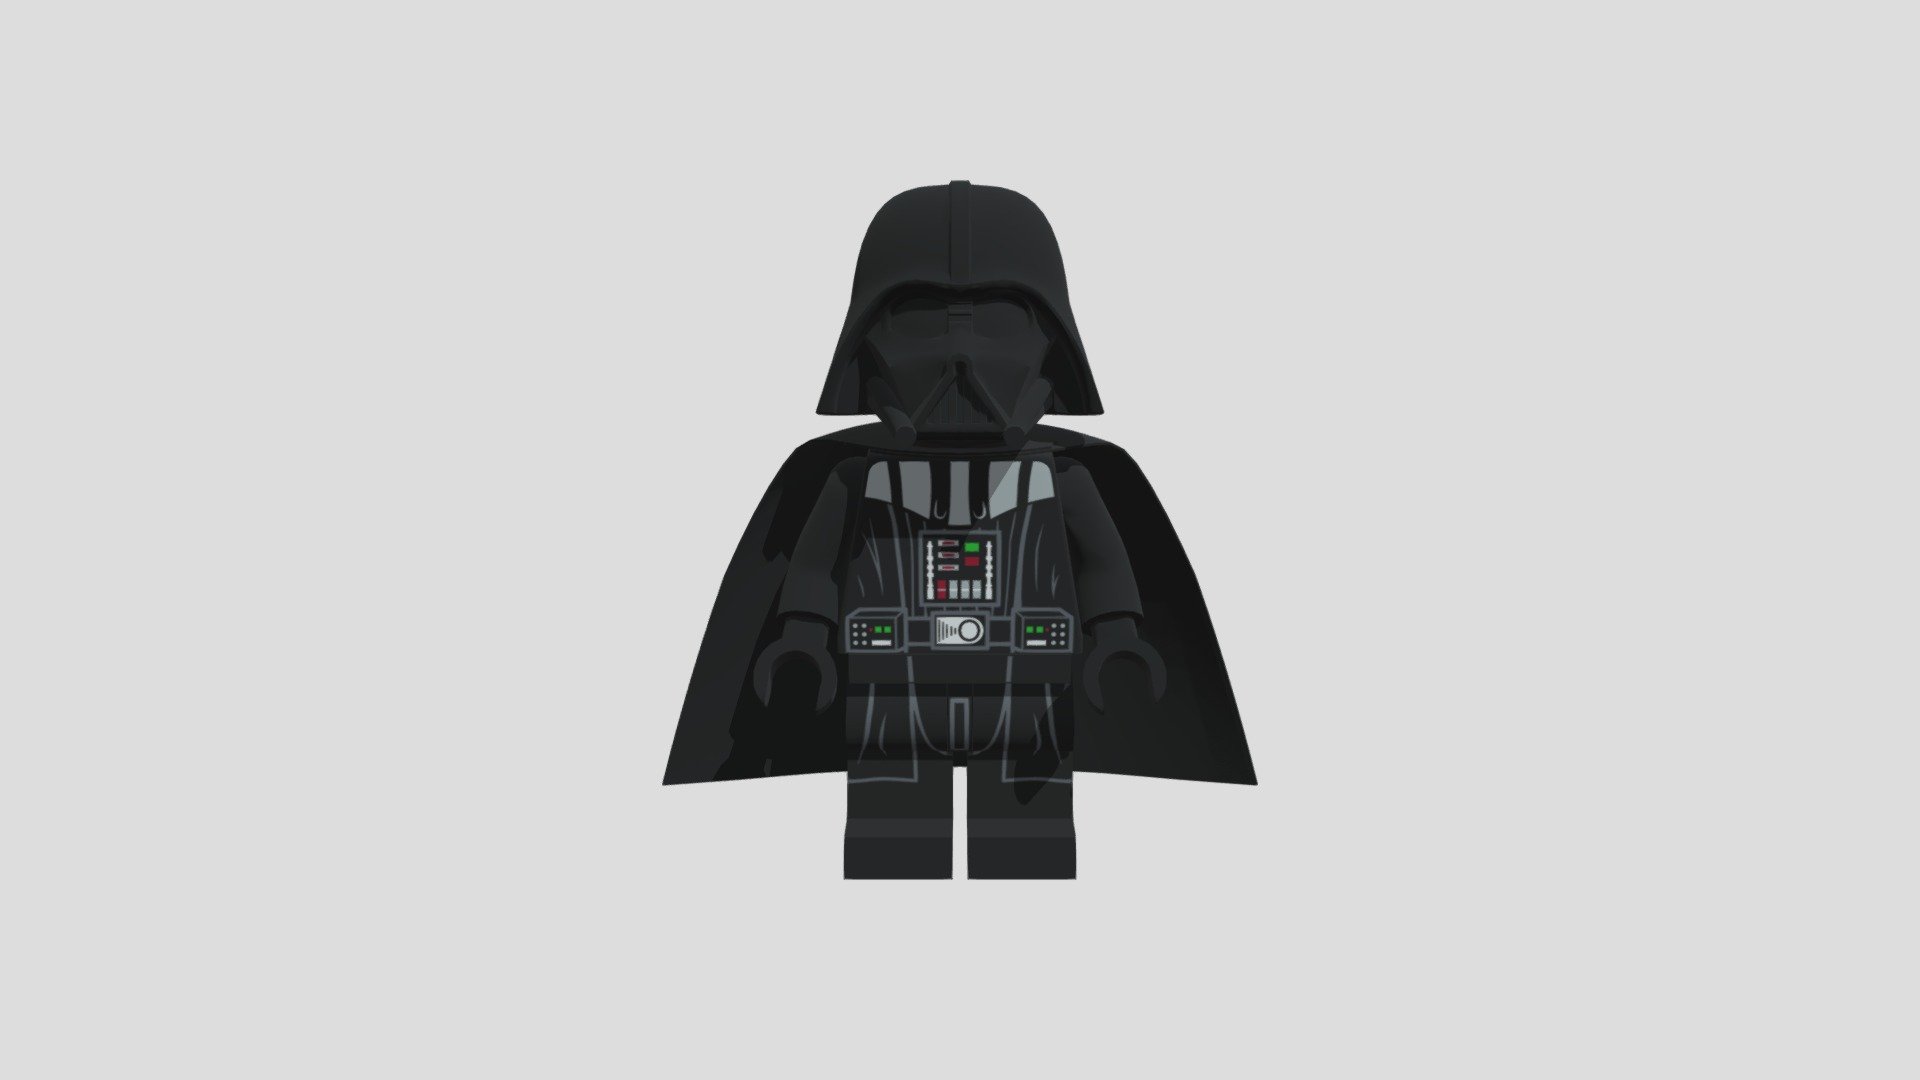 LEGO Darth Vader (Not Rigged Free)